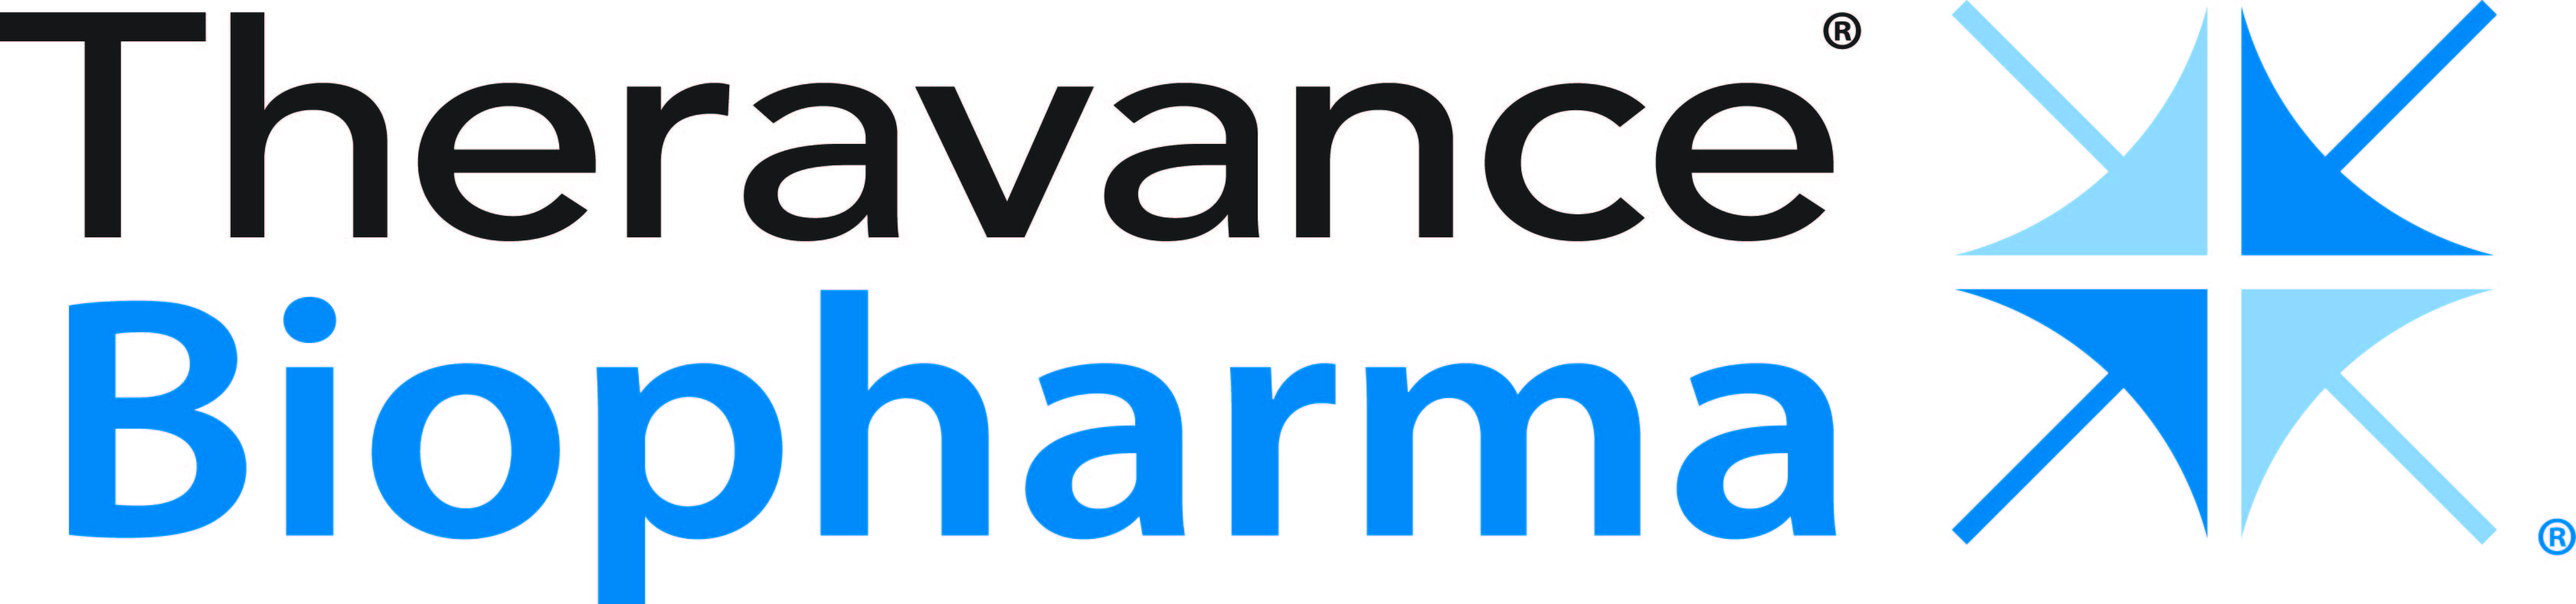 TheravanceBiopharma-logo